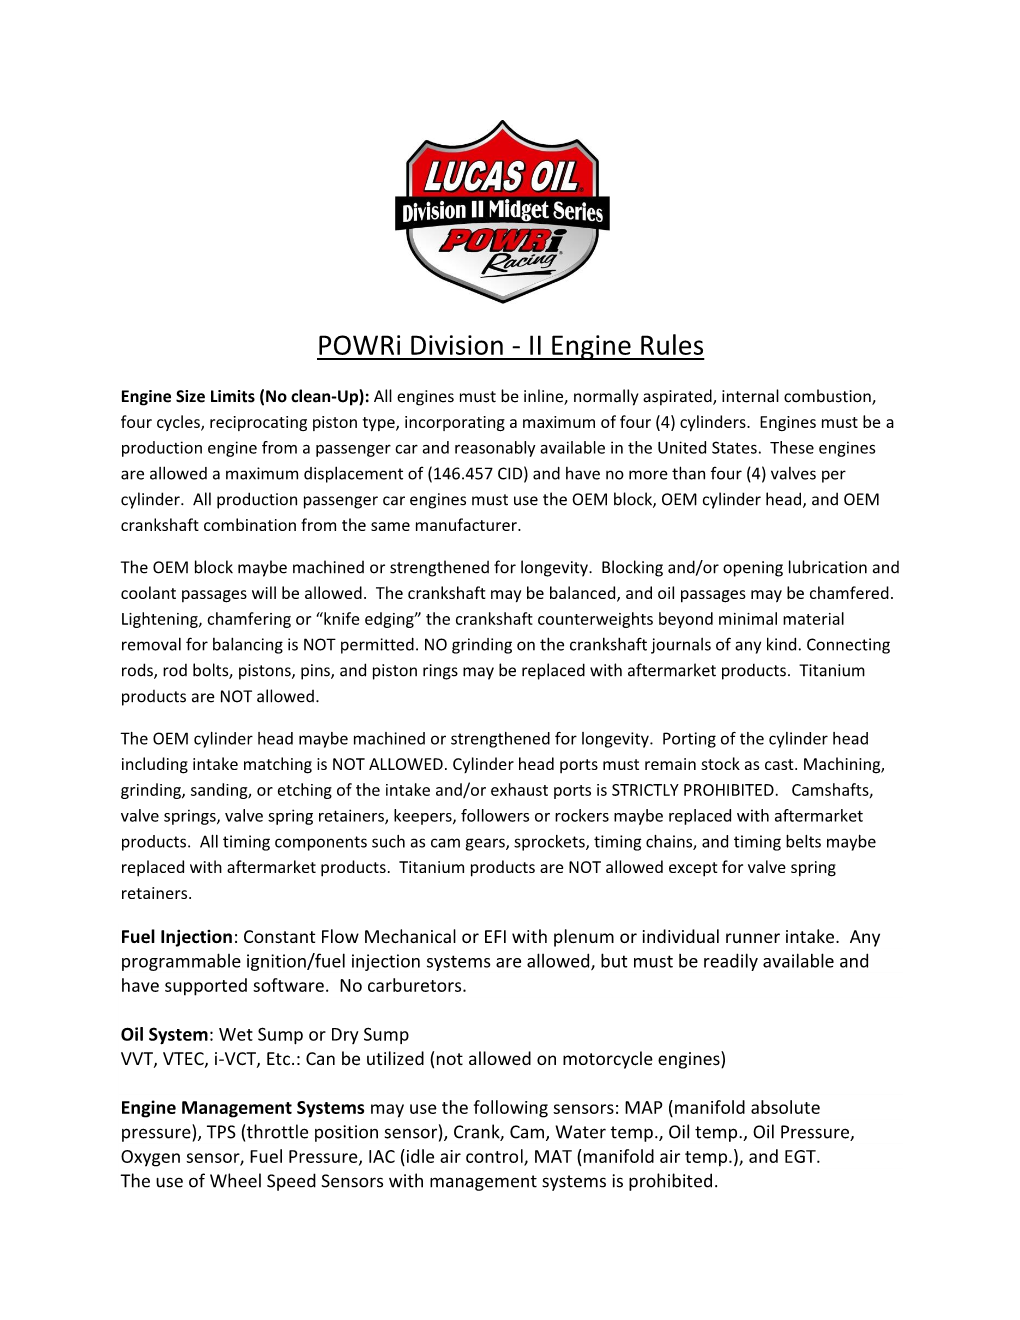 Powri Division - II Engine Rules